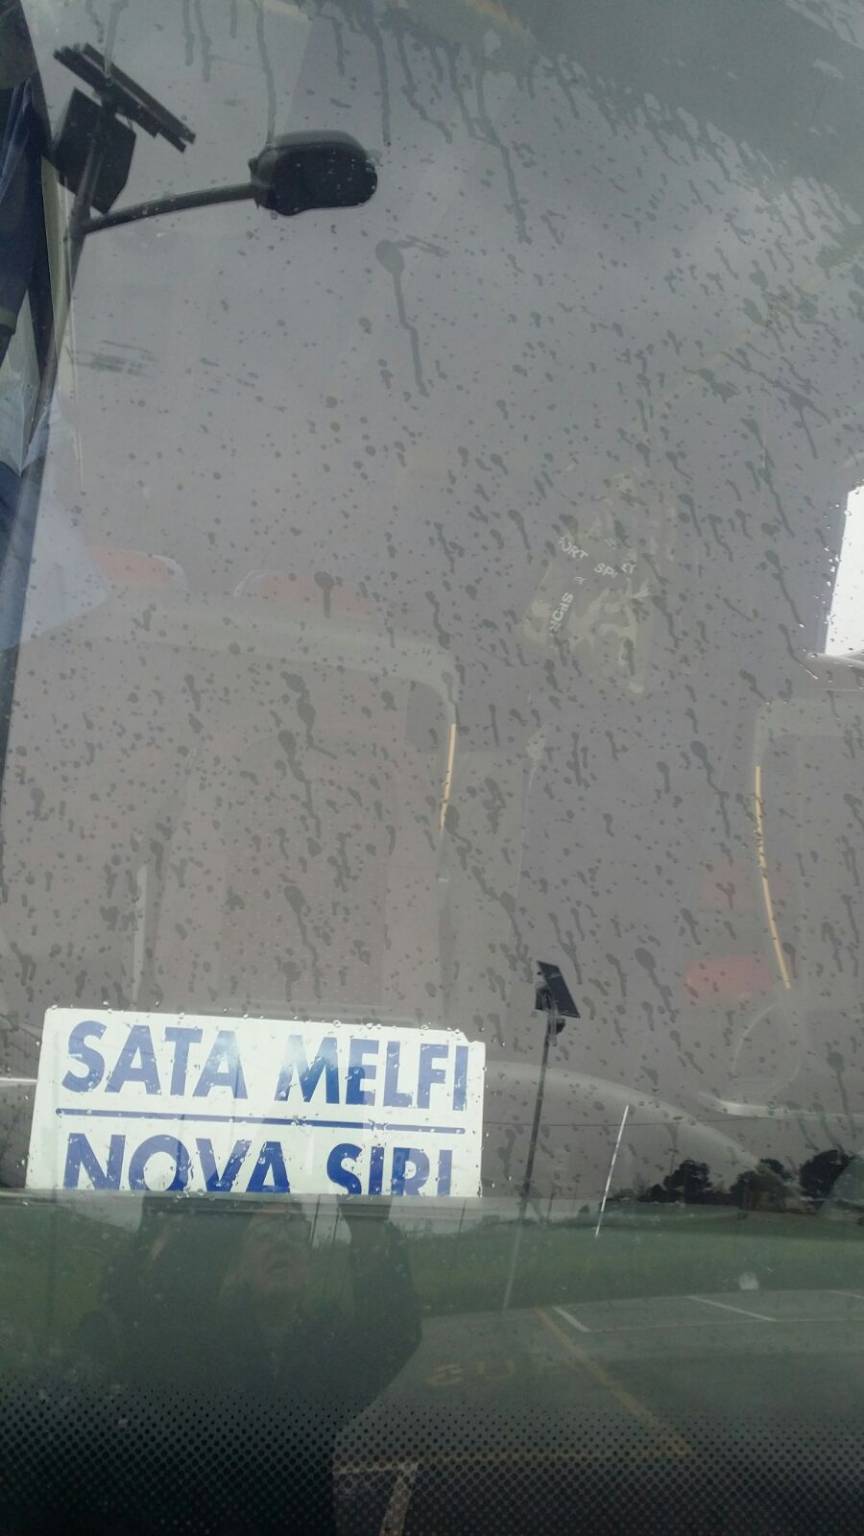 Autobus Nova Siri- Sata Fca Melfi